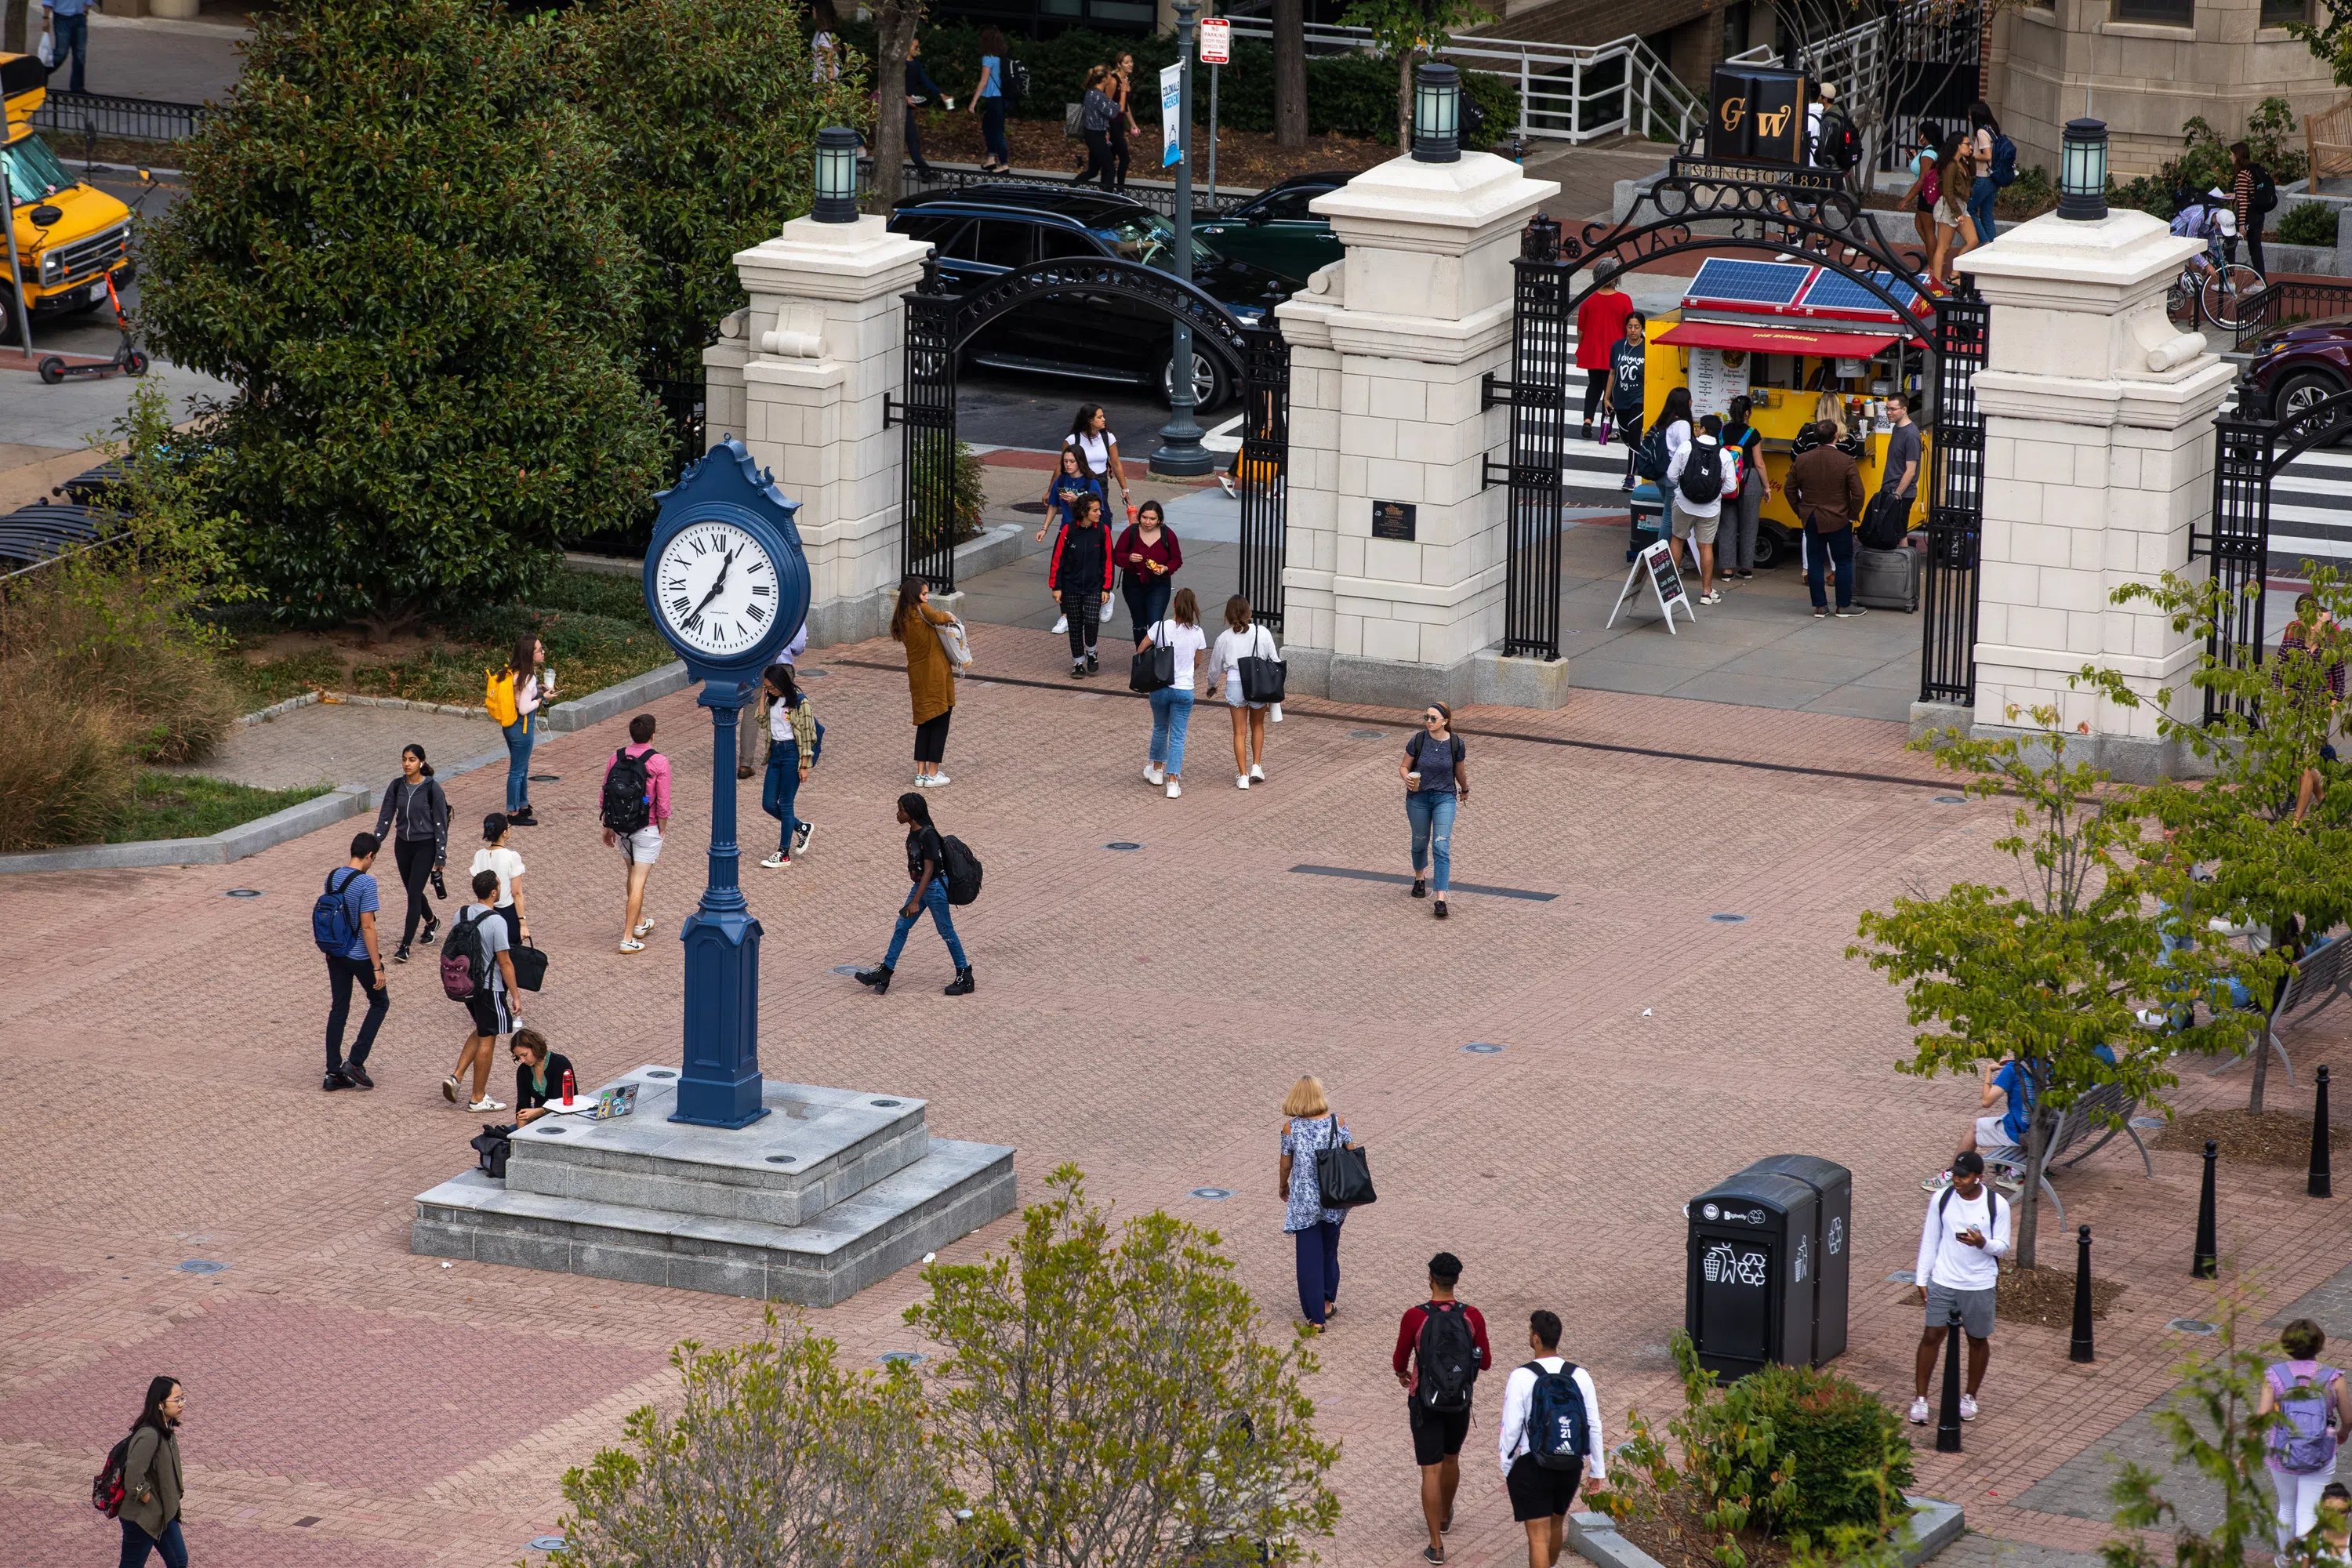 Students walking in Kogan Plaza near a clock tower.